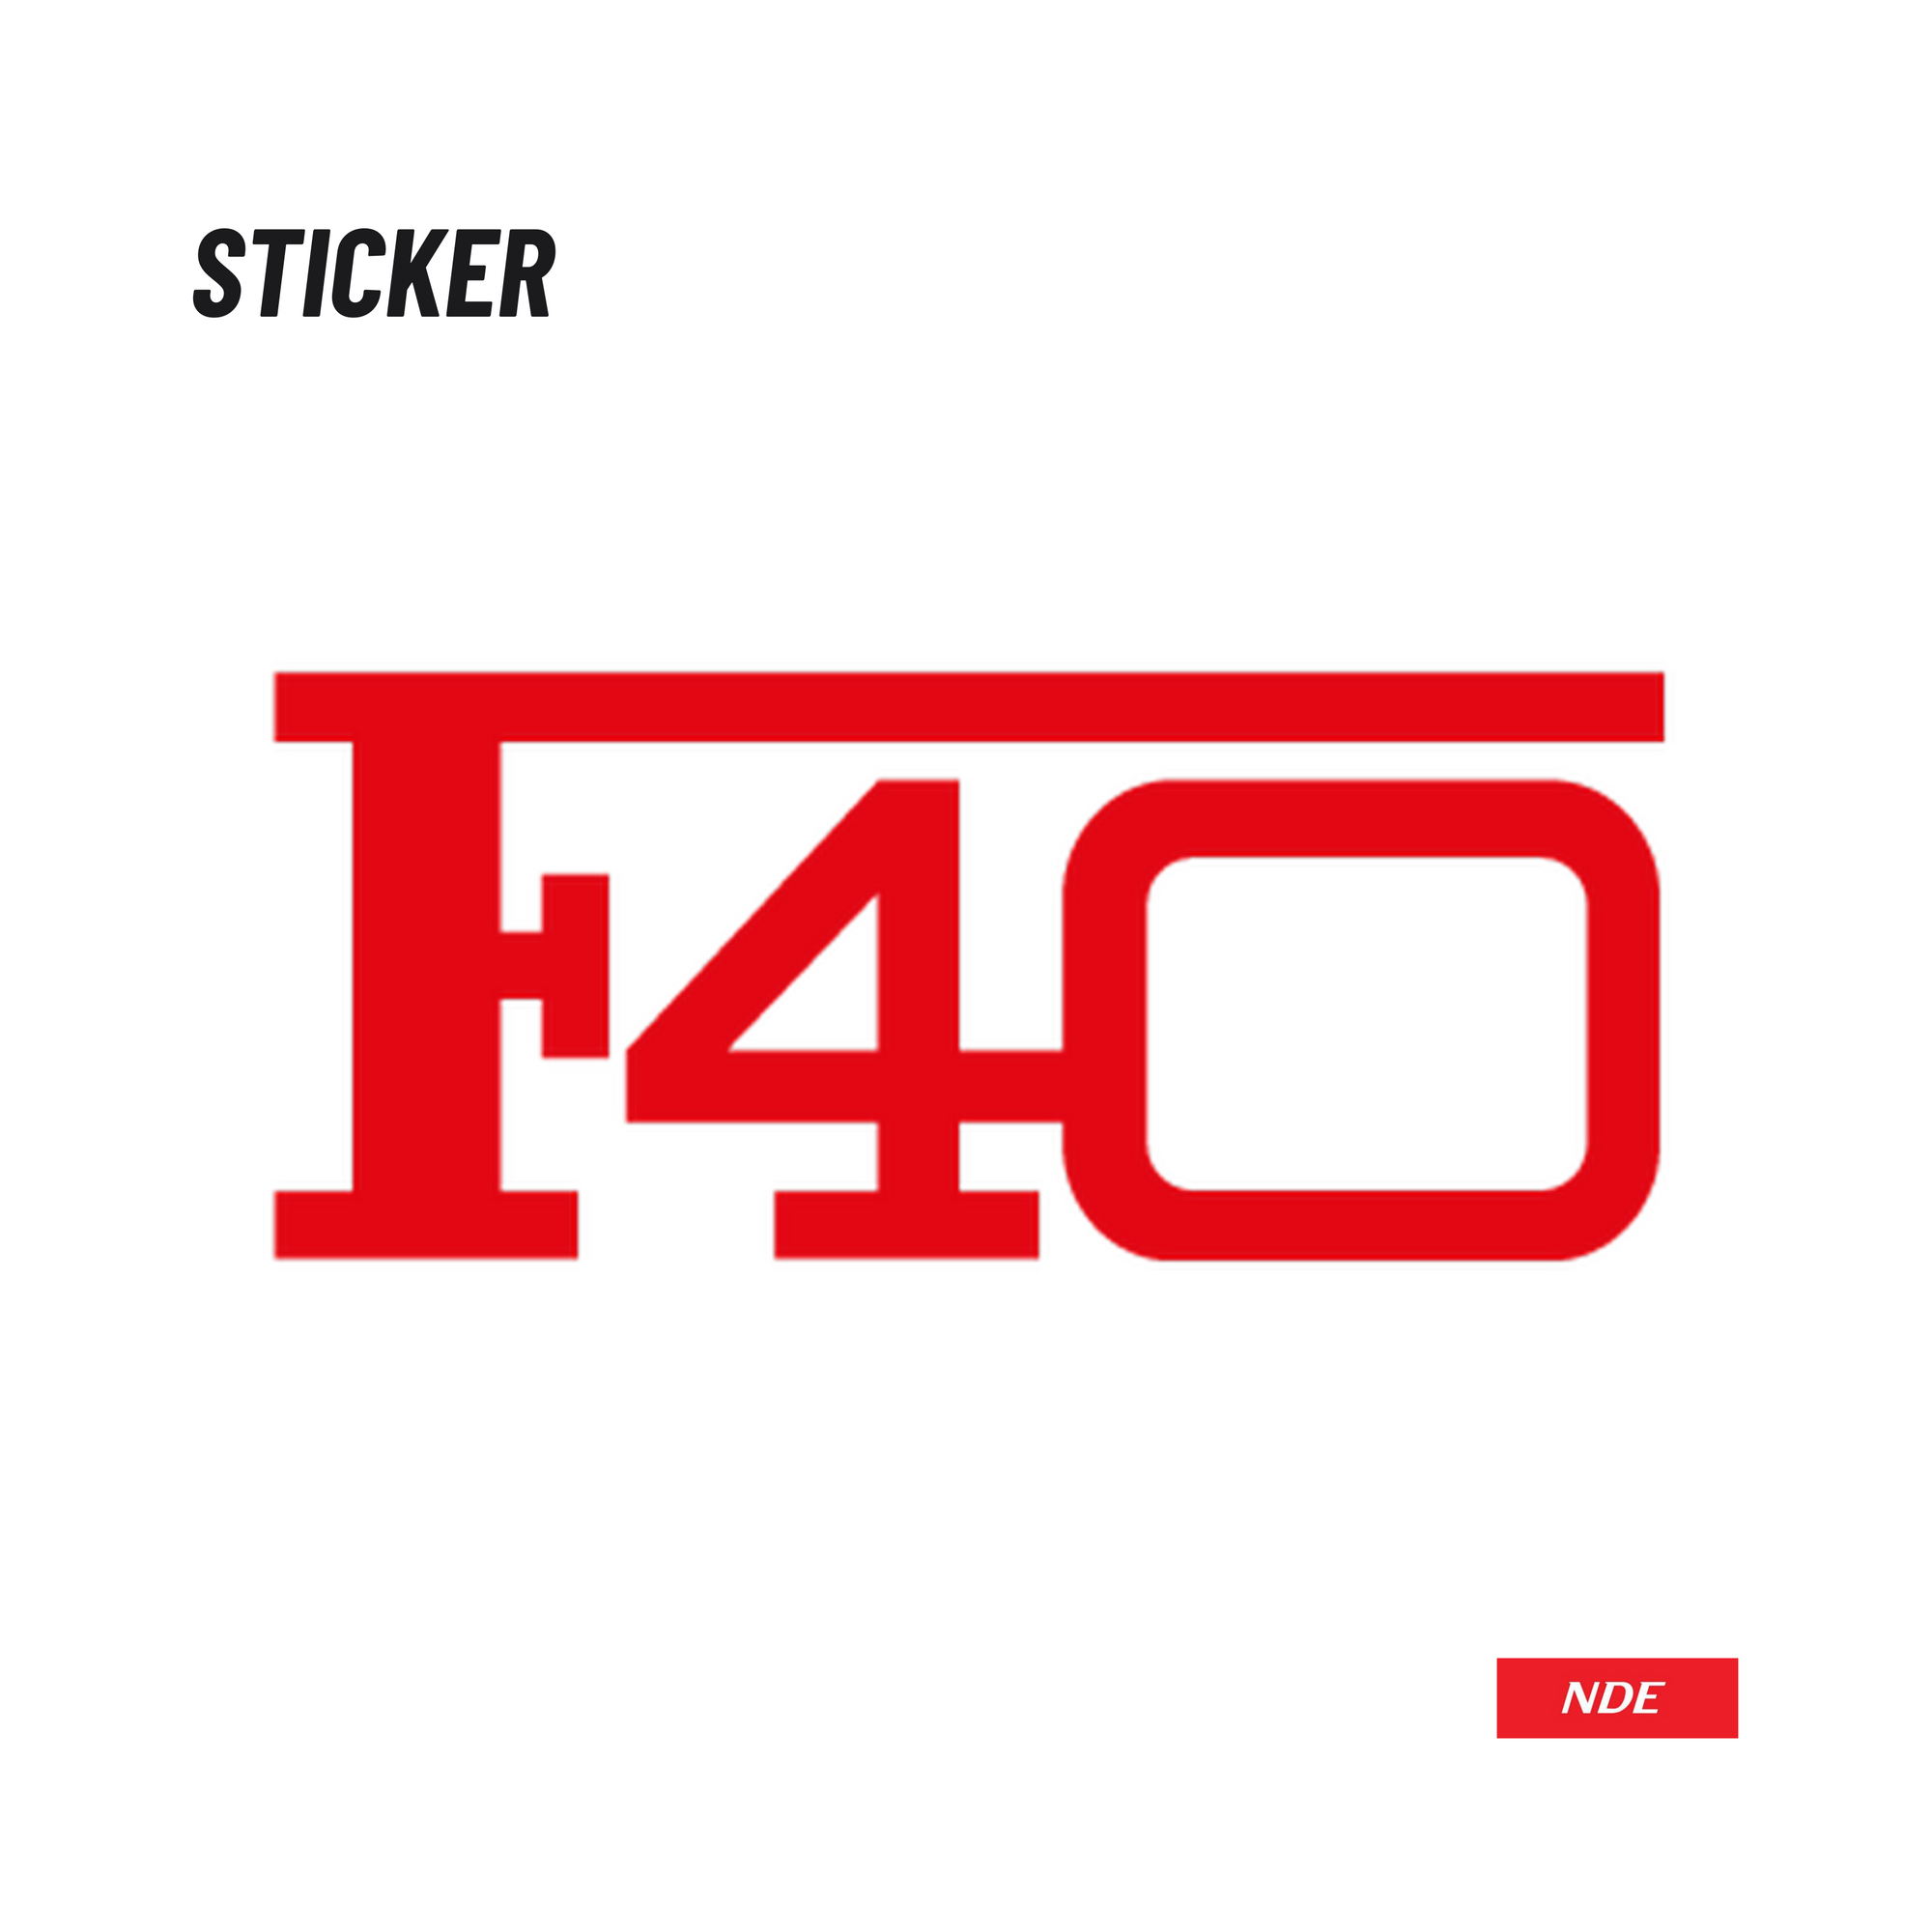 STICKER, F40